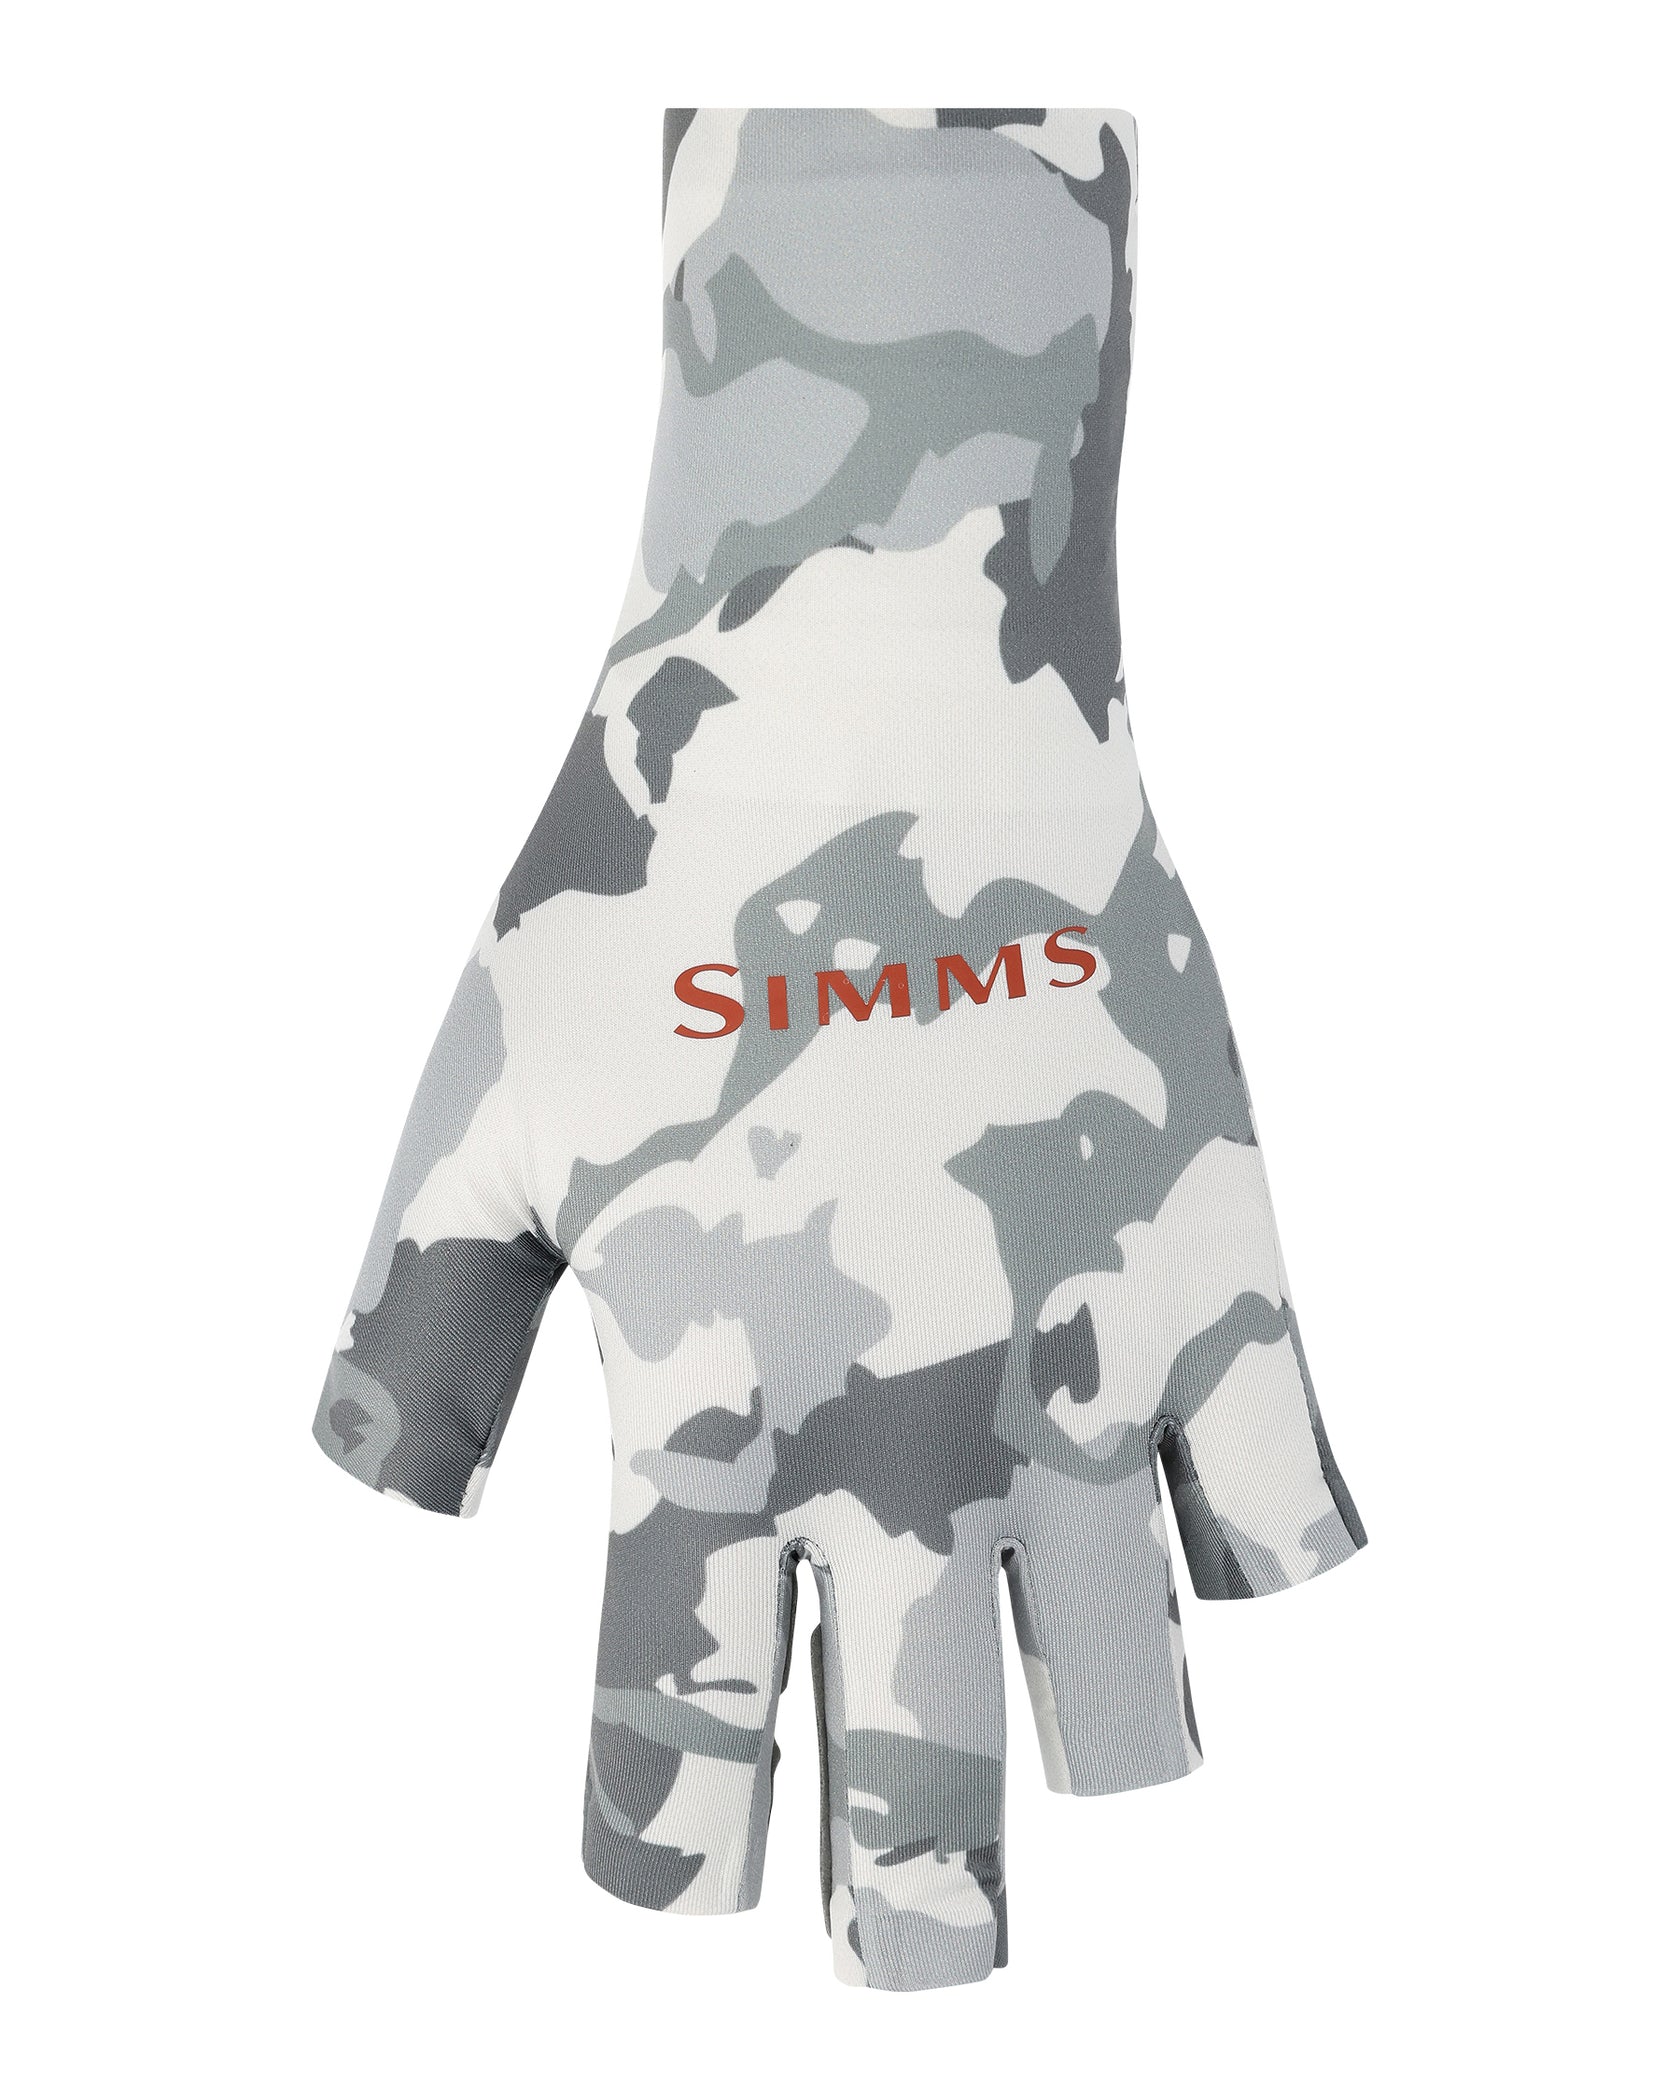 Simms SolarFlex SunGlove - Regiment Camo Cinder - XL